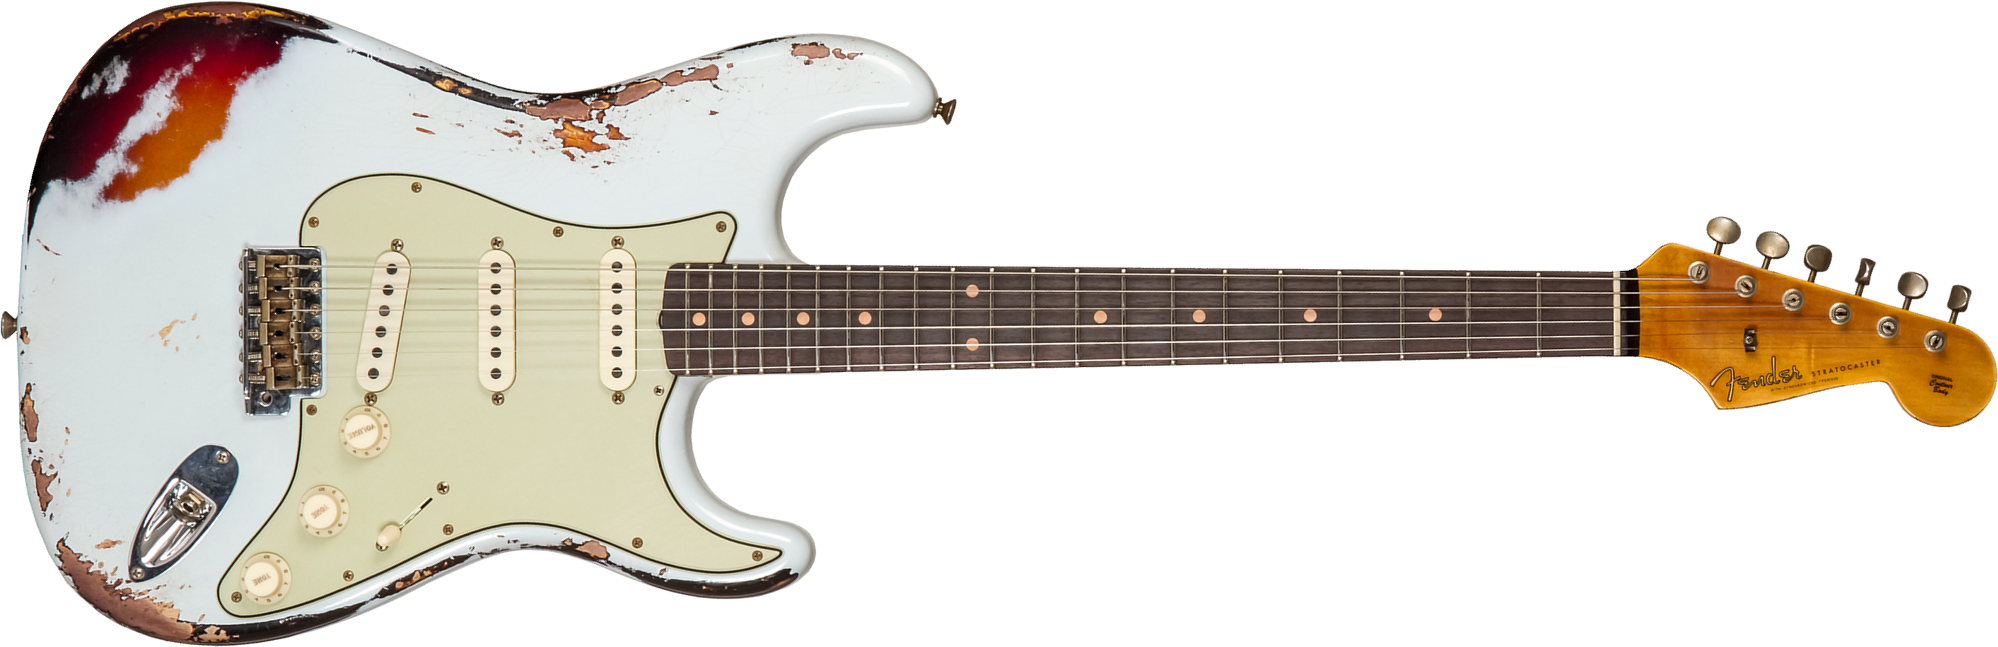 Fender Custom Shop Strat 1961 3s Trem Rw #cz573714 - Heavy Relic Aged Sonic Blue O. 3-color Sunburst - Guitarra eléctrica con forma de str. - Main pic